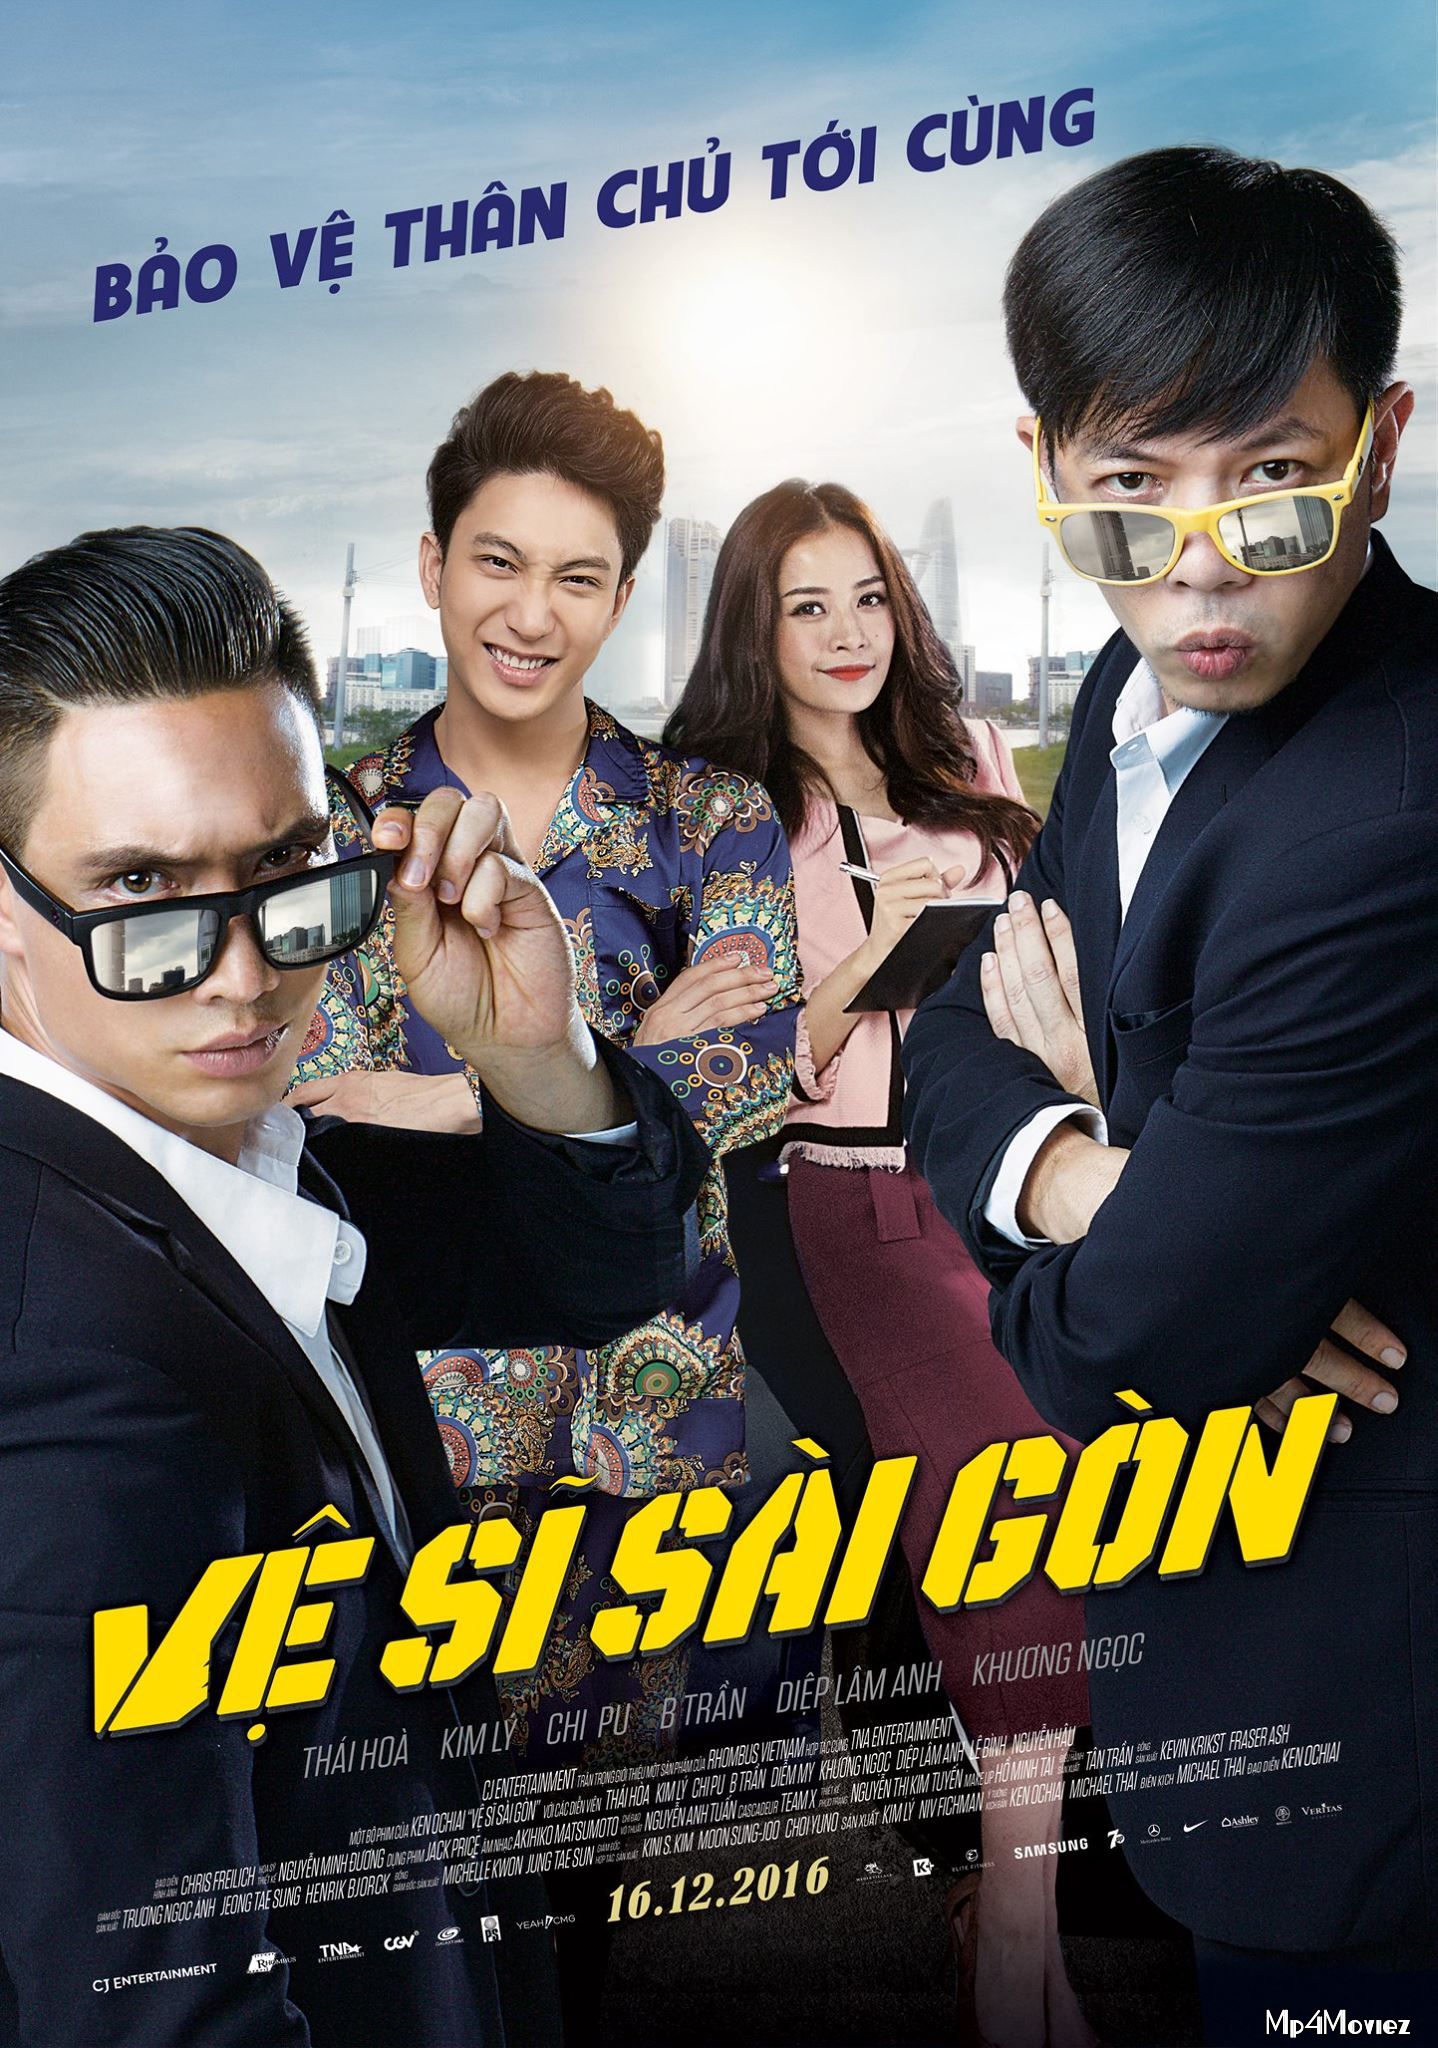 Saigon Bodyguards 2016 Hindi Dubbed Full Movie download full movie